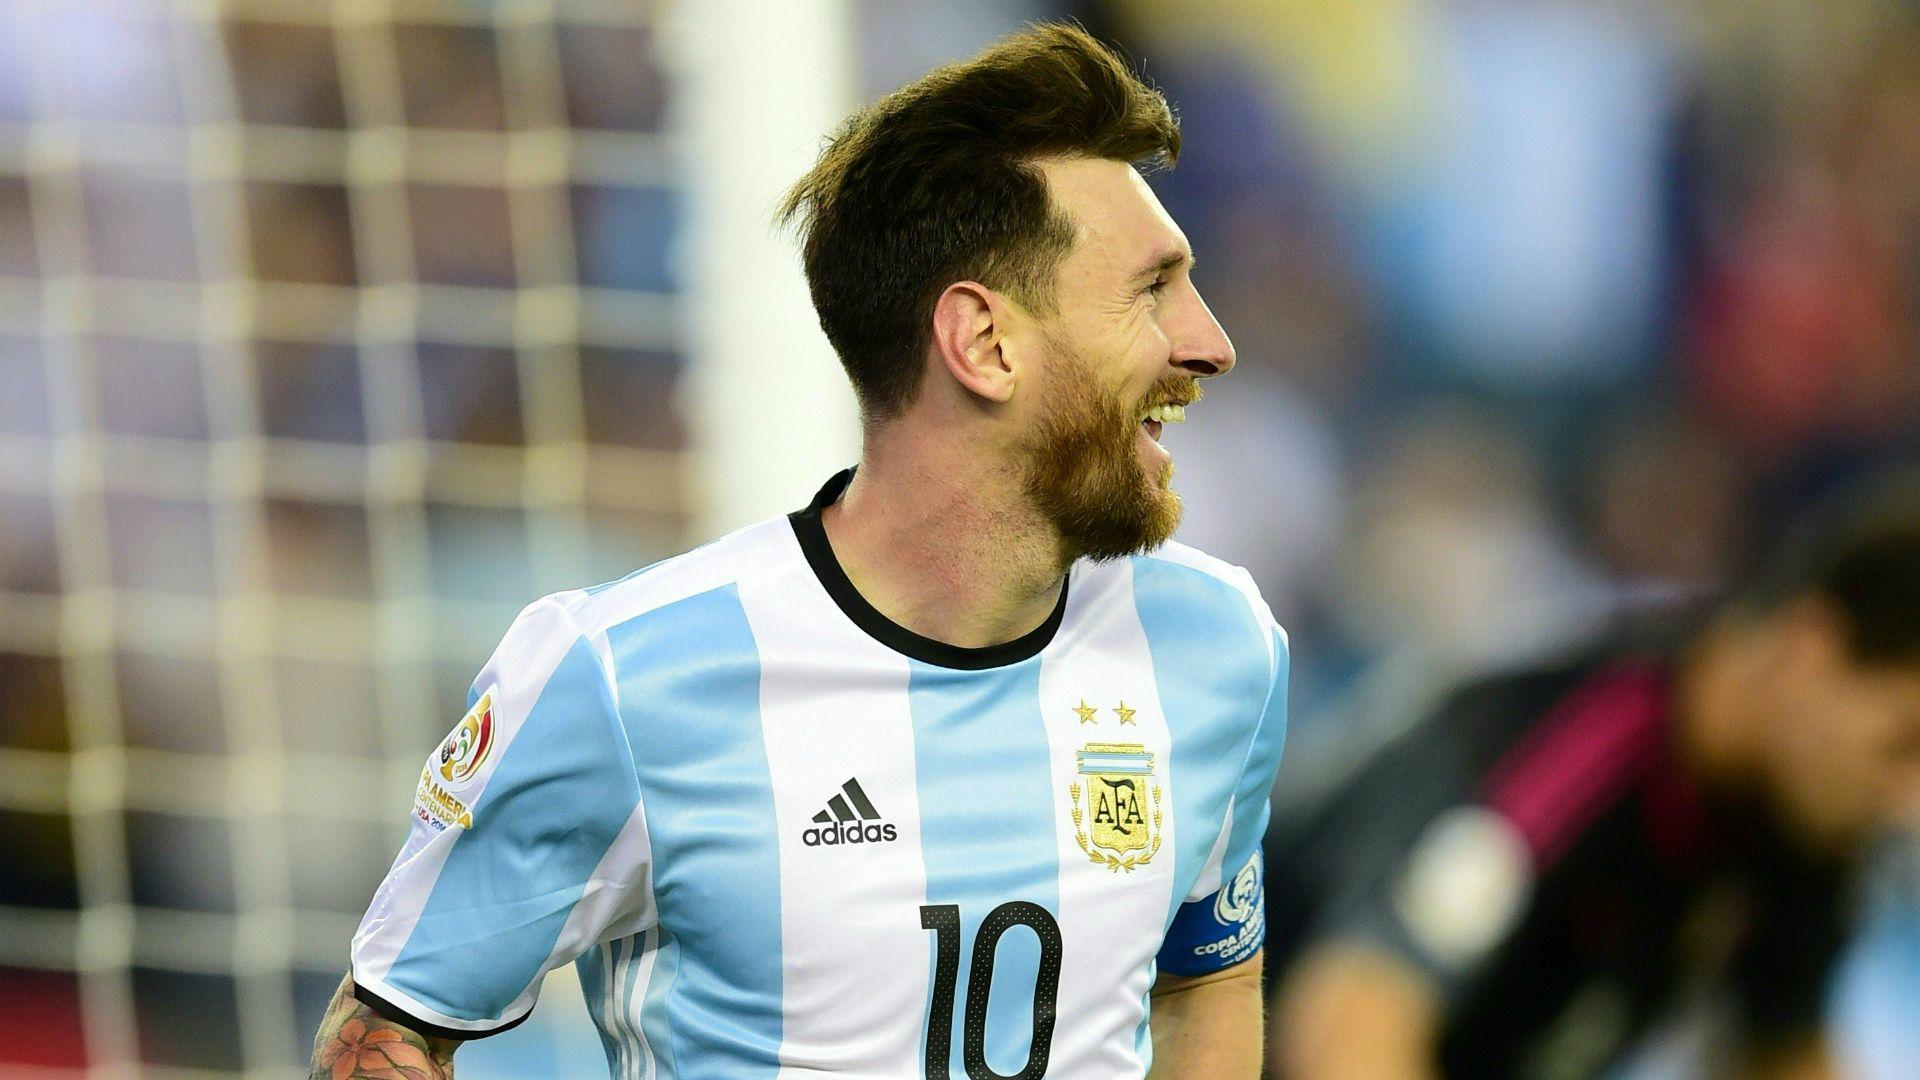 Messi Argentina Wallpaper Backgrounds HD